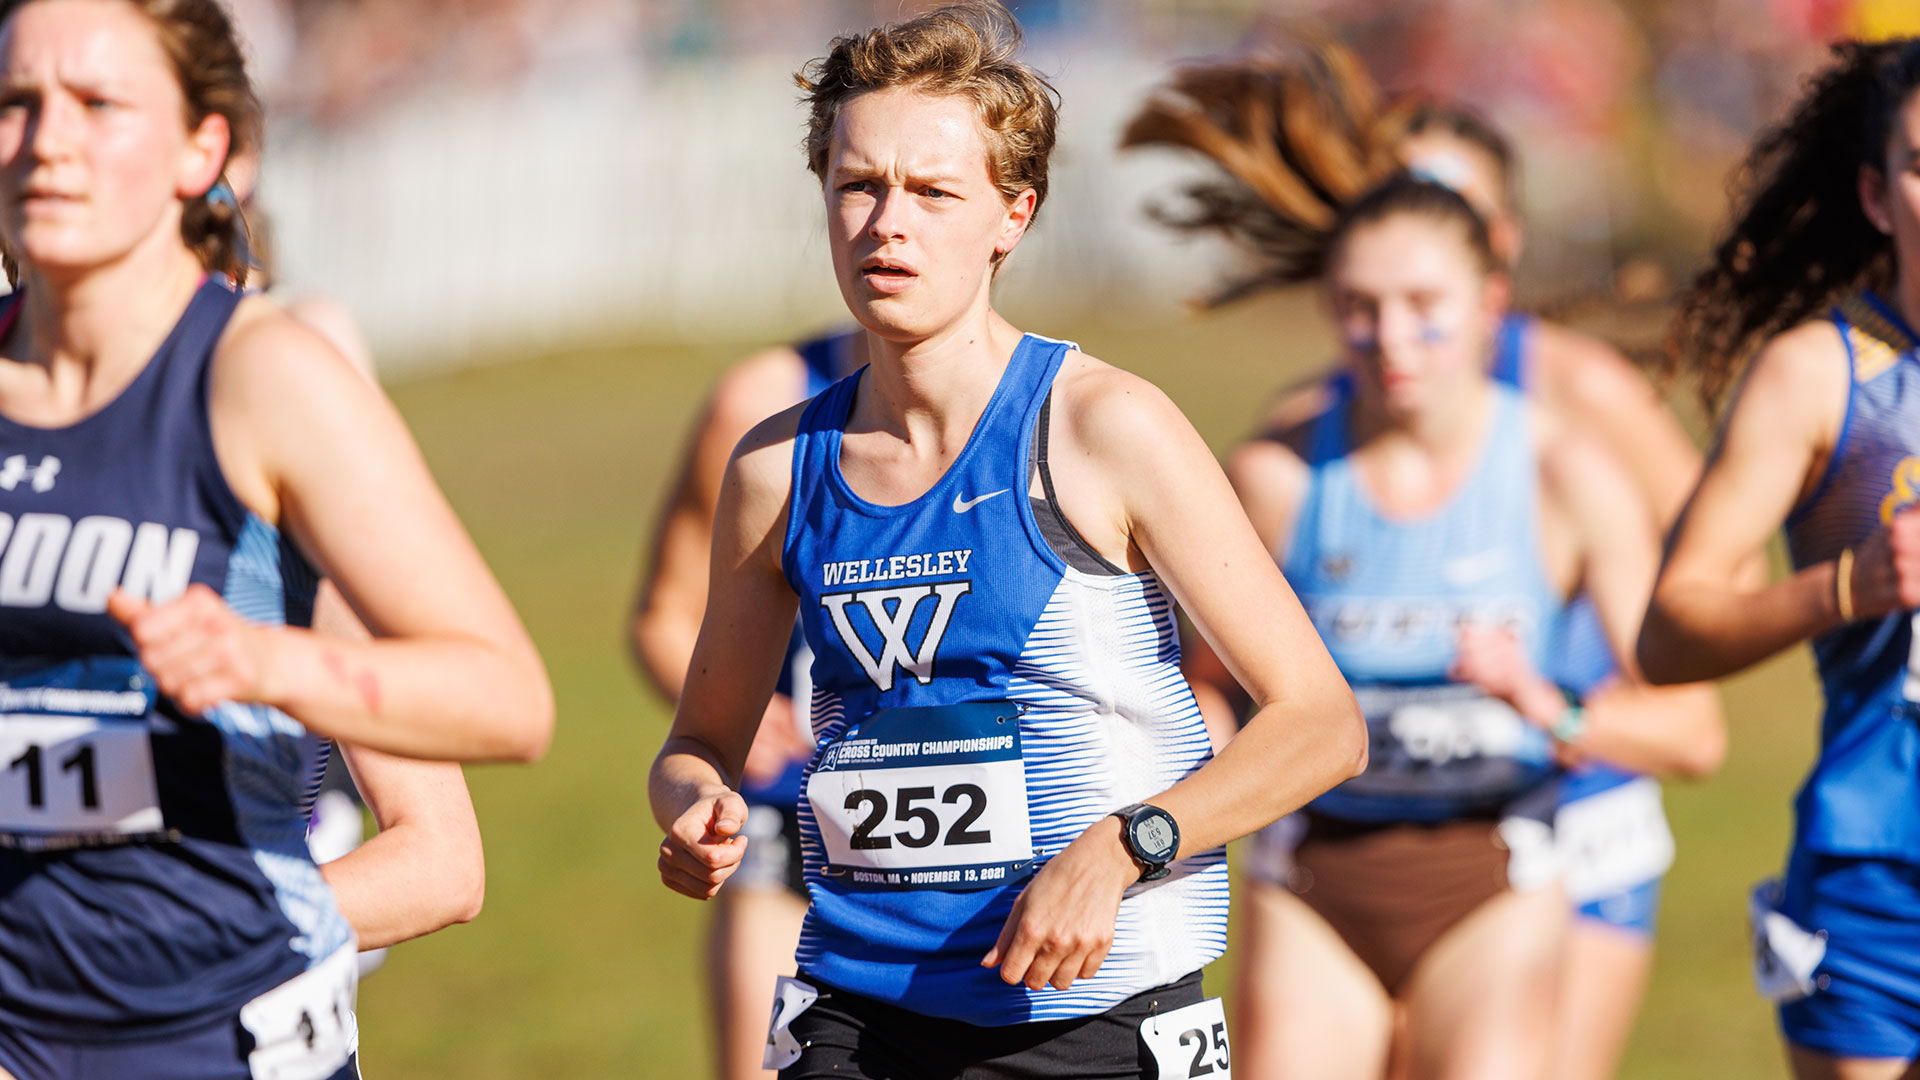 women's cross country runner in blue Wellesley uniform